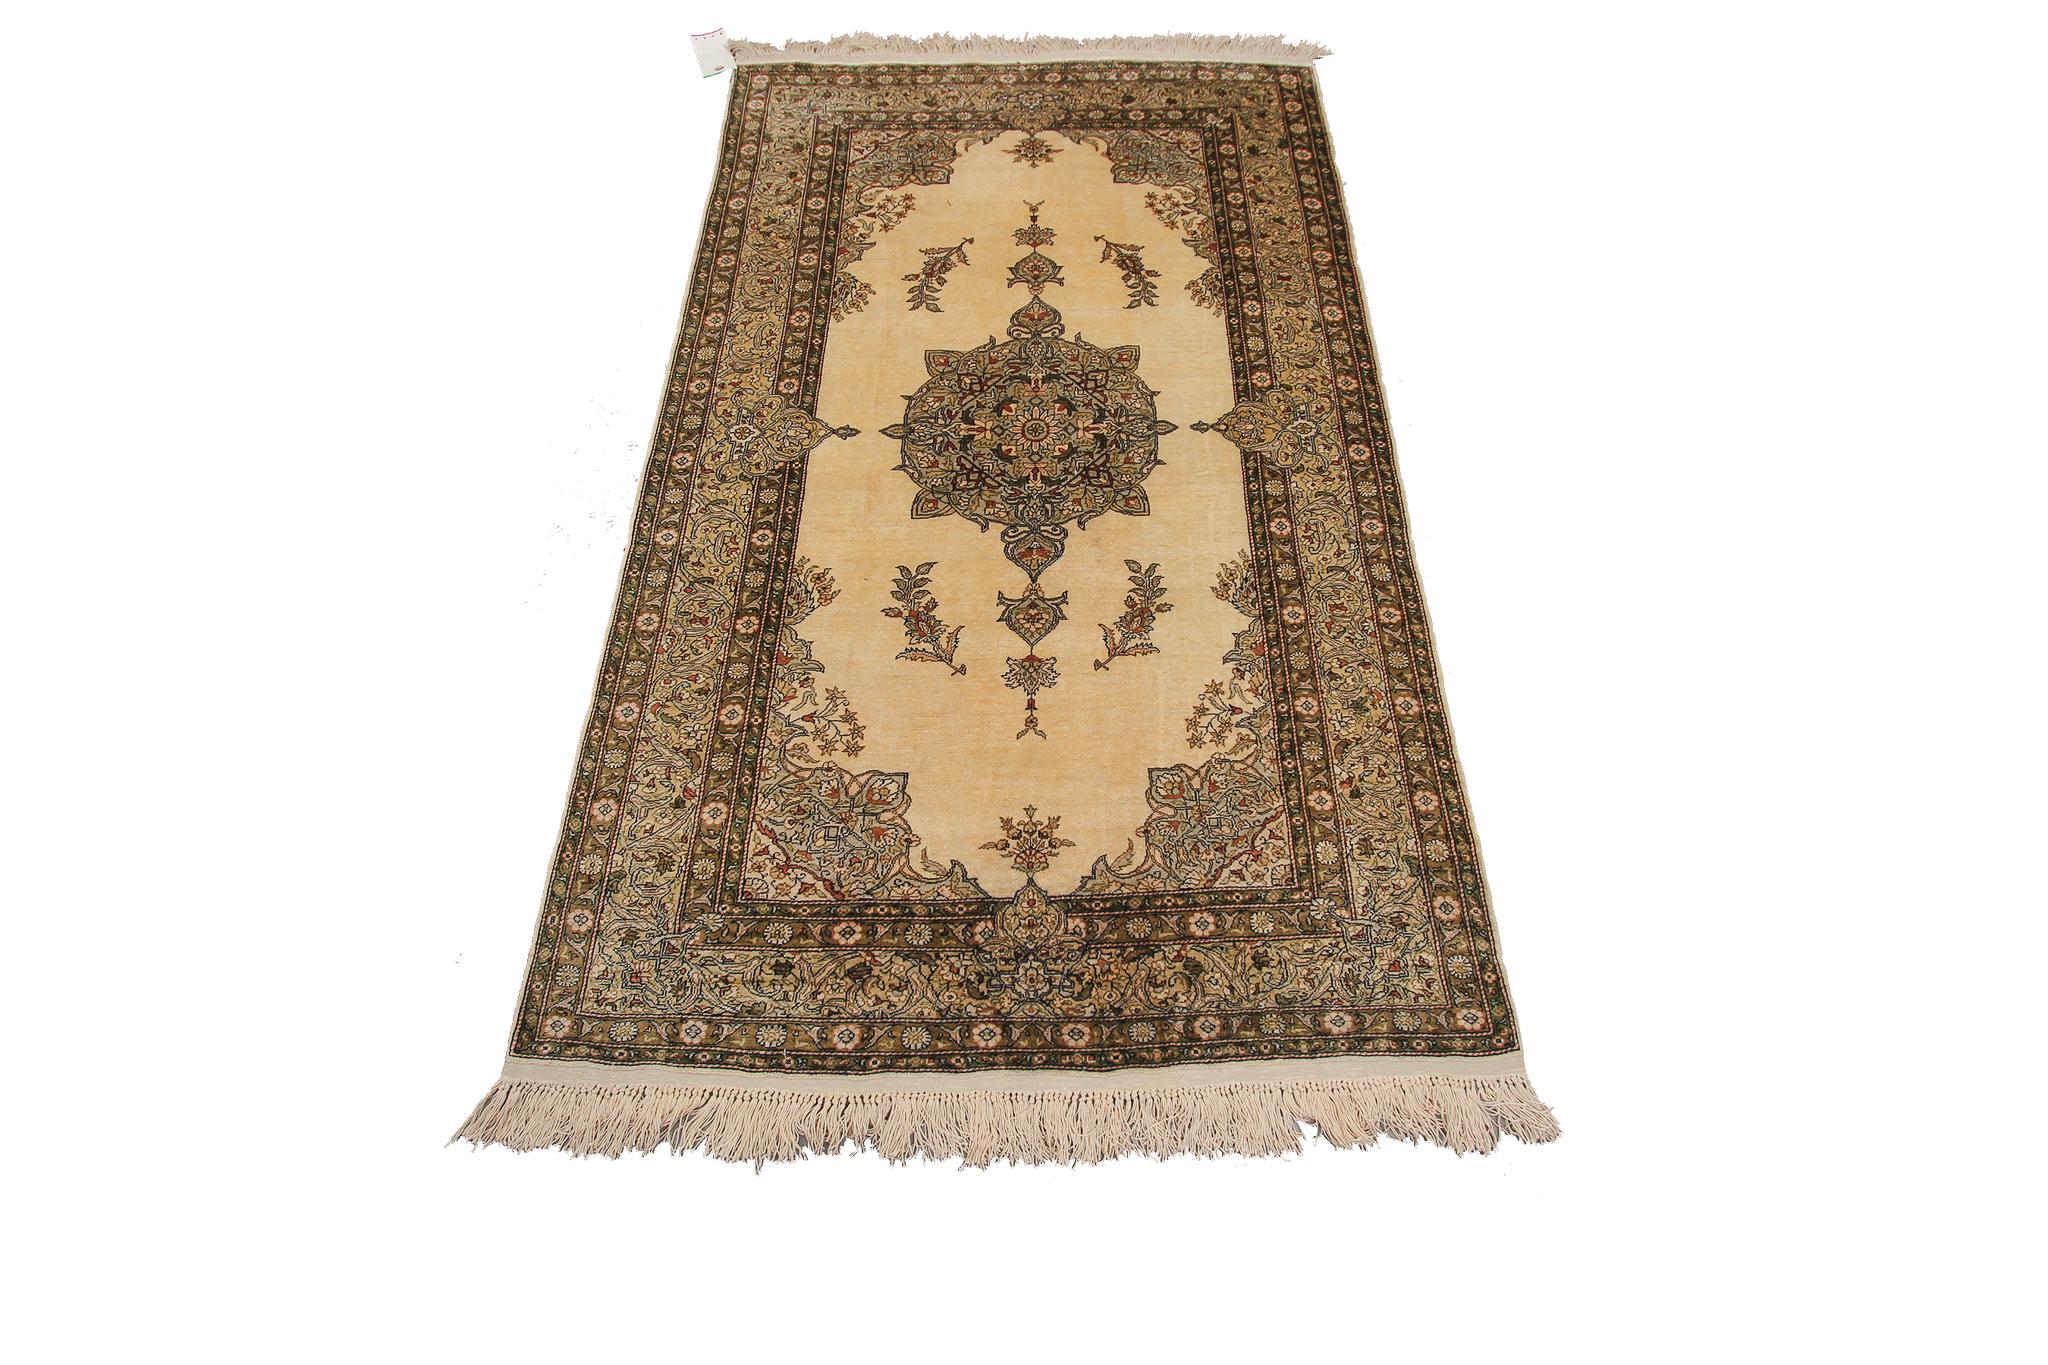 Museum quality rare vintage 100% pure silk hereke rug kaysari rug fine high quality 3x5

2'10